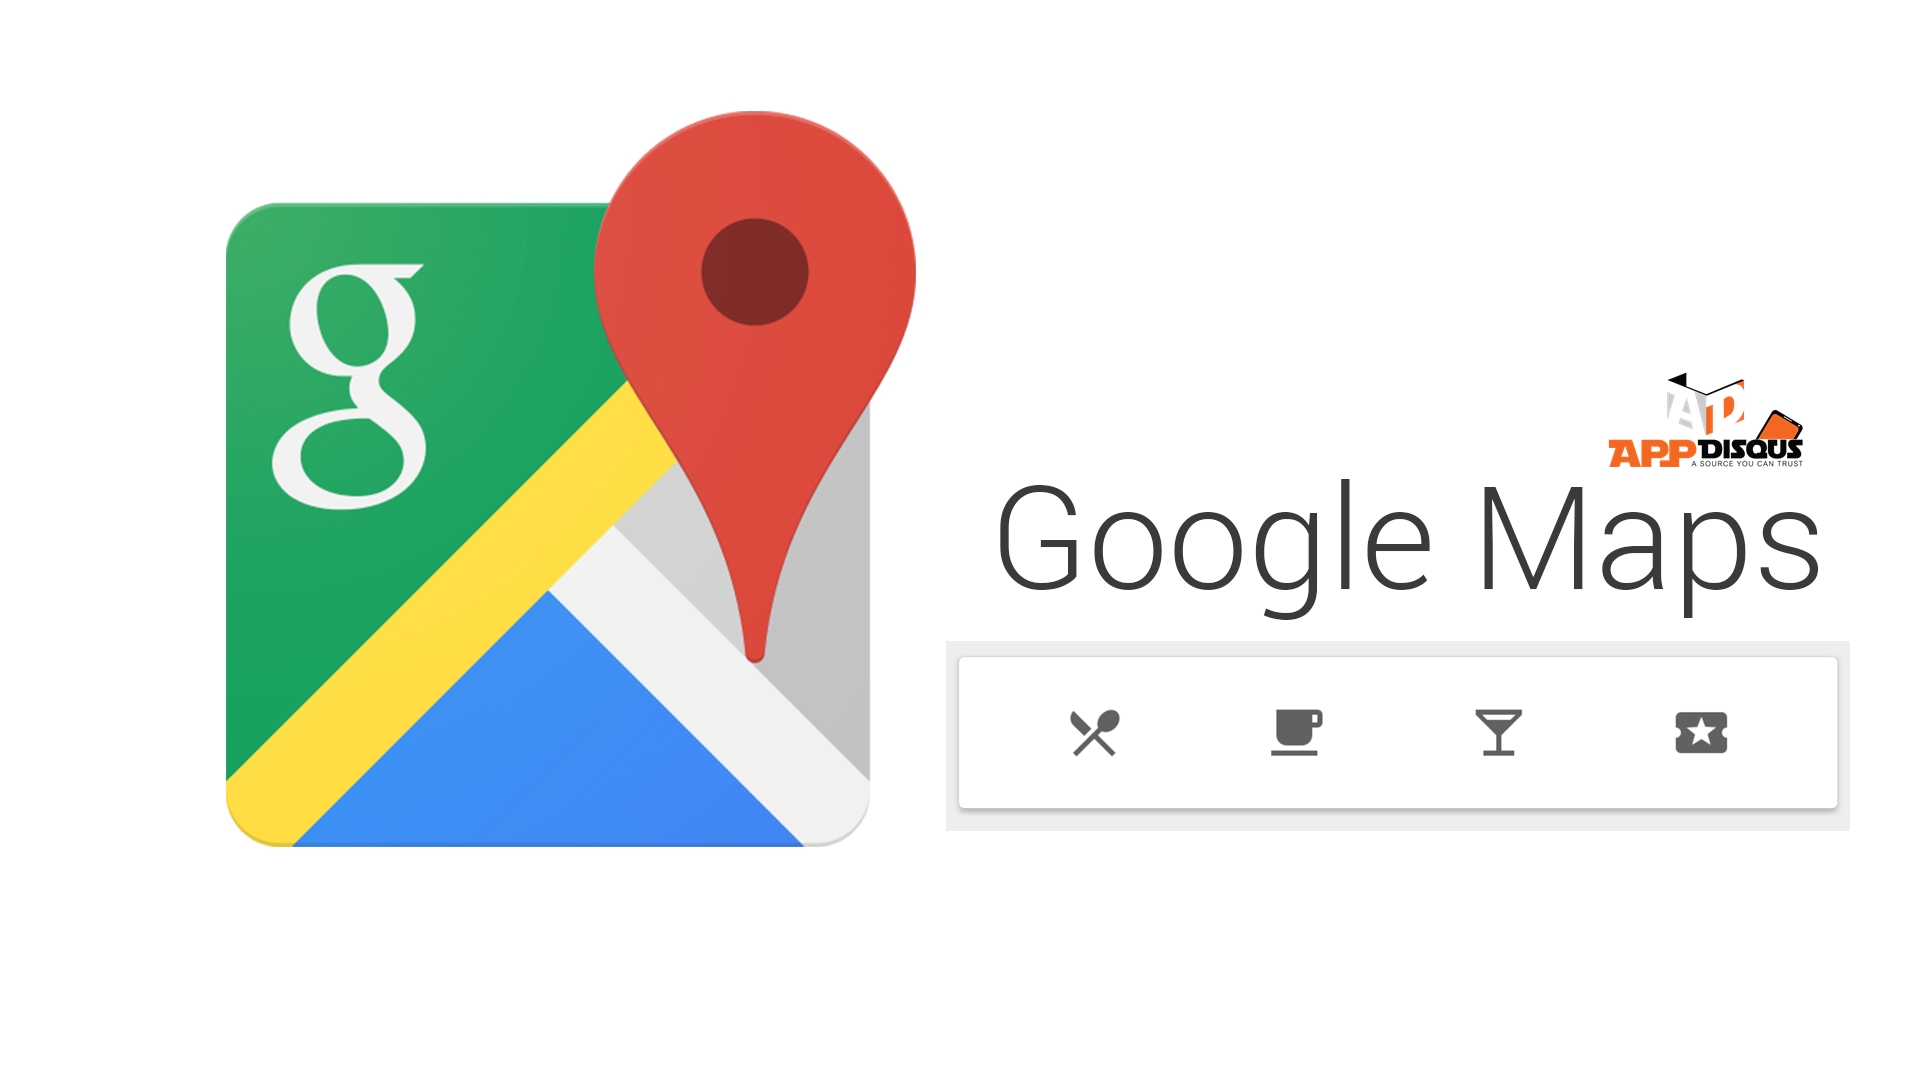 Google Maps | แอพพลิเคชั่น | Tip! มารู้จักและรู้วิธีใช้ 4 ไอคอนลัดบน Google Maps เพื่อค้นหาสถานที่ใกล้เคียงได้แบบง่ายดาย